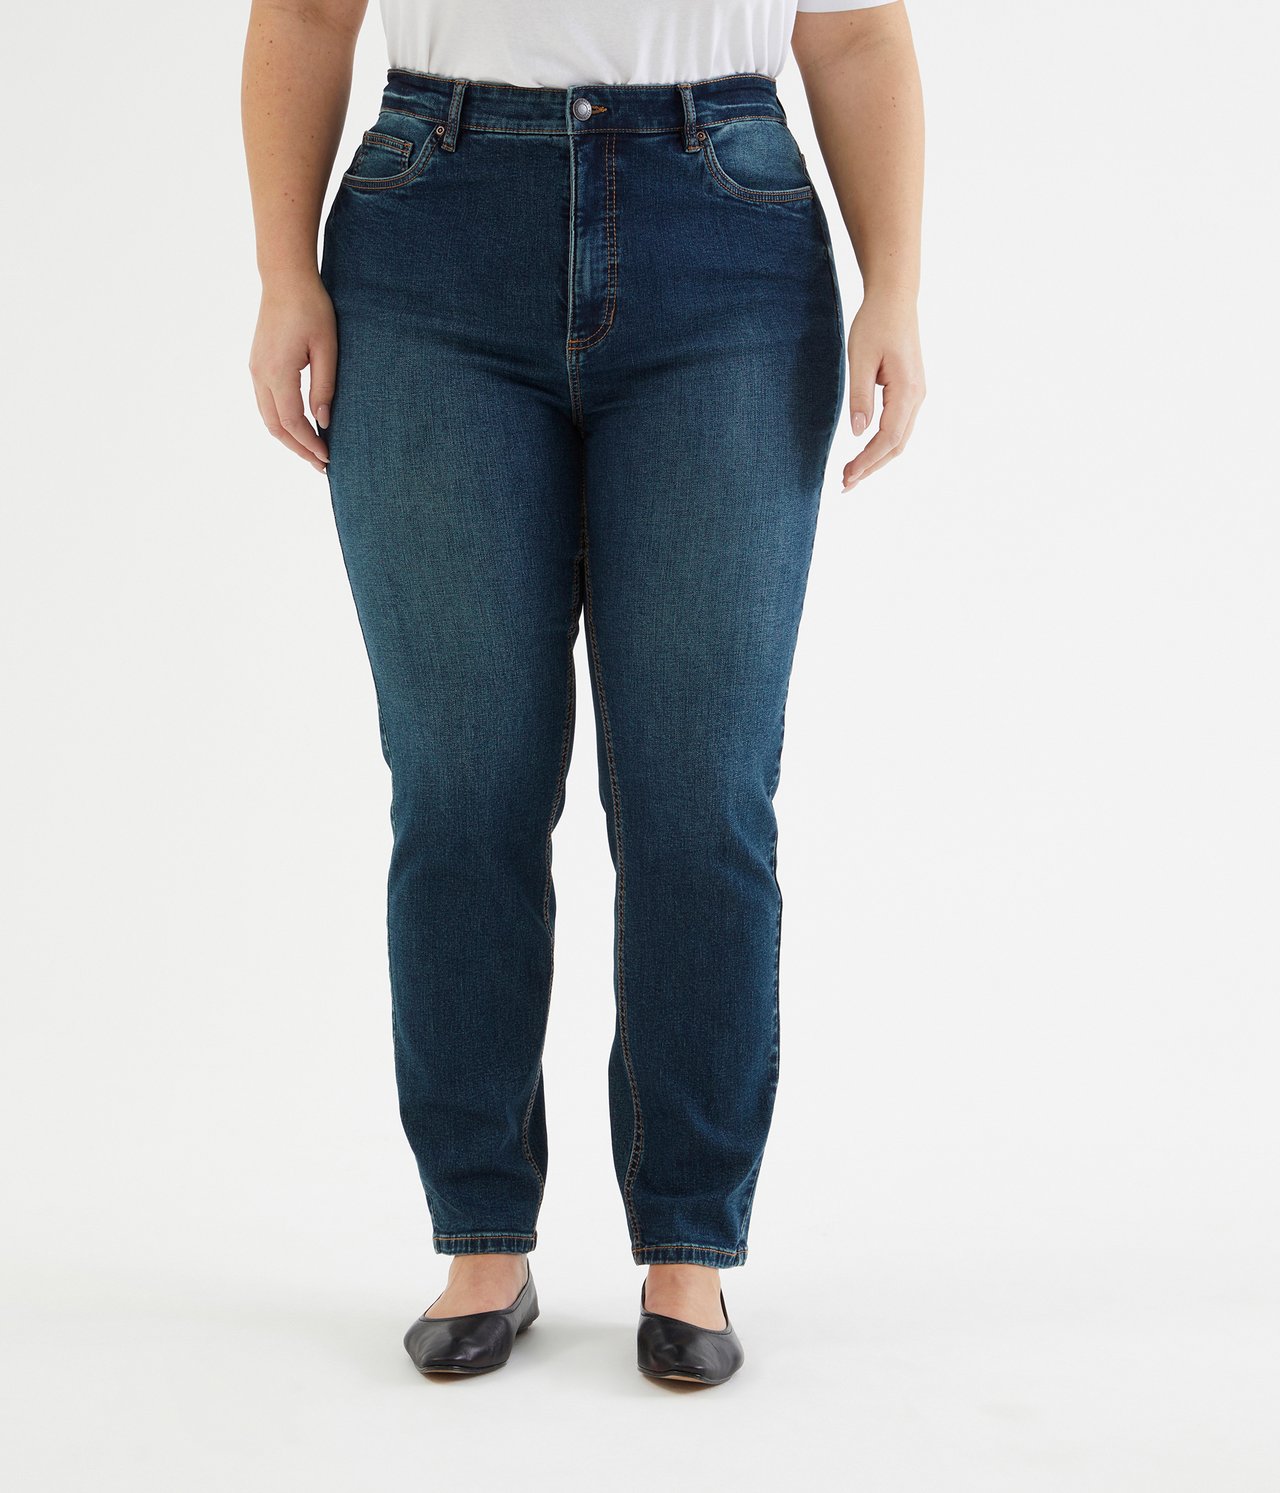 Jenny jeans straight slim fit Denim - 44 - 3